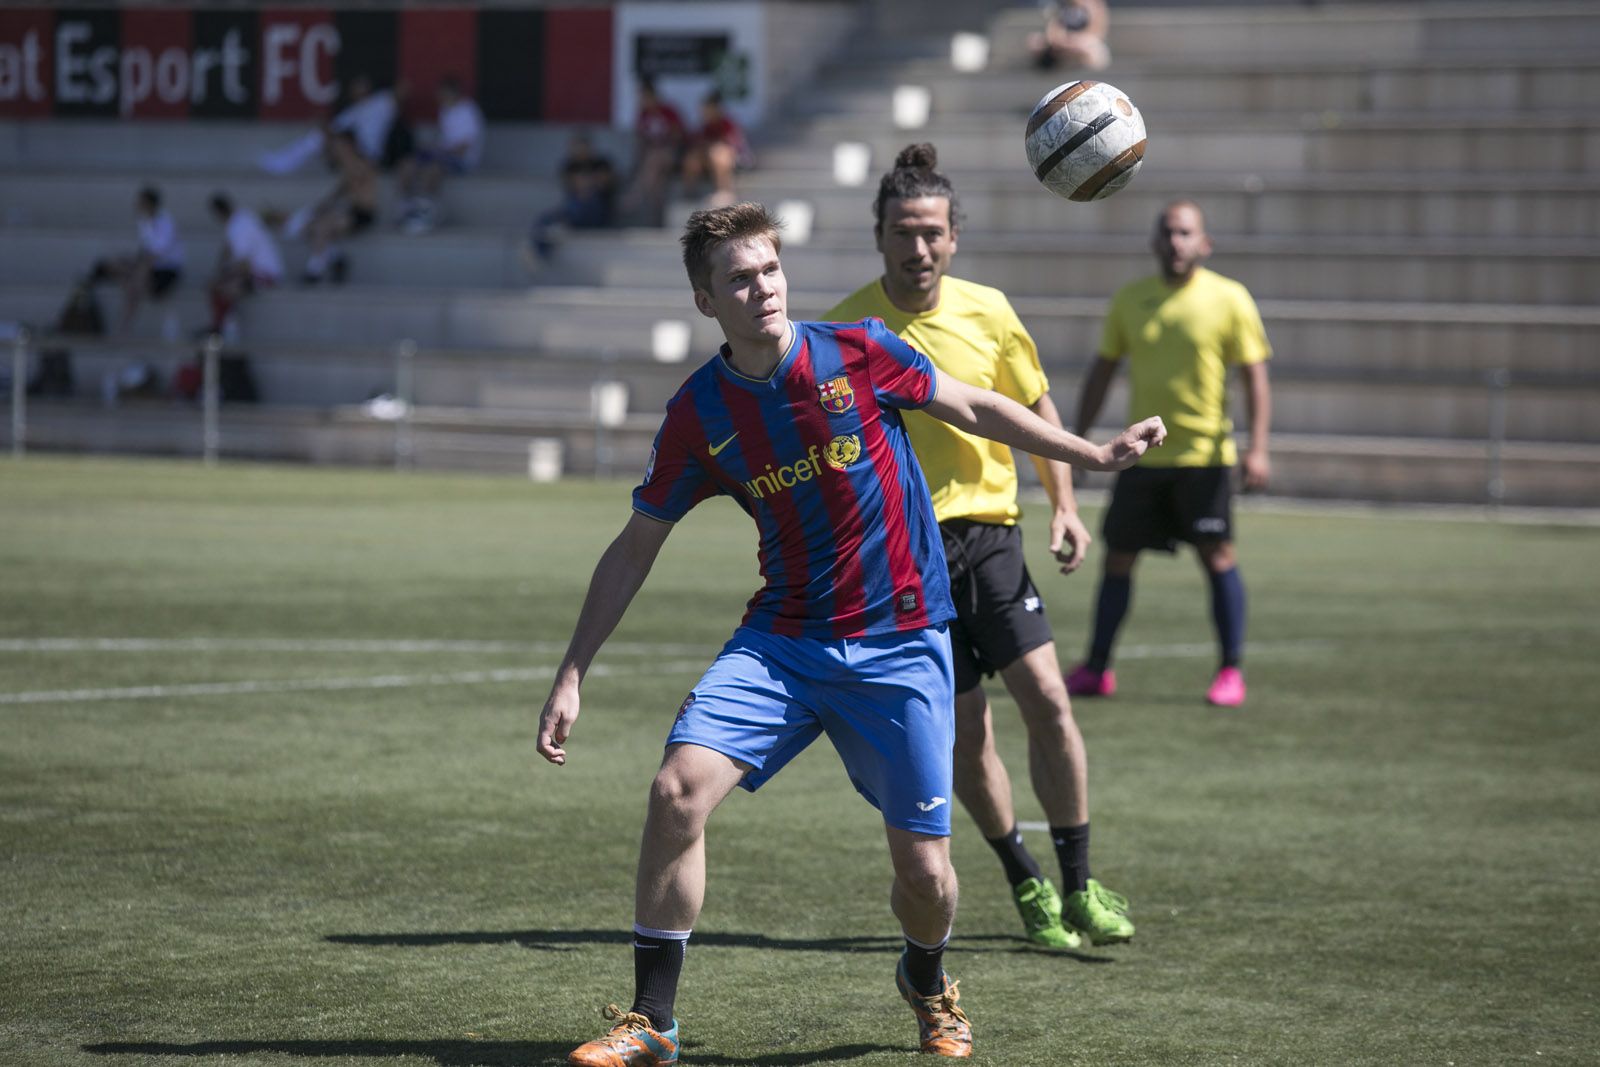 Torneig de futbol 7 a la ZEM Jaume Tubau. FOTO: Lali Puig